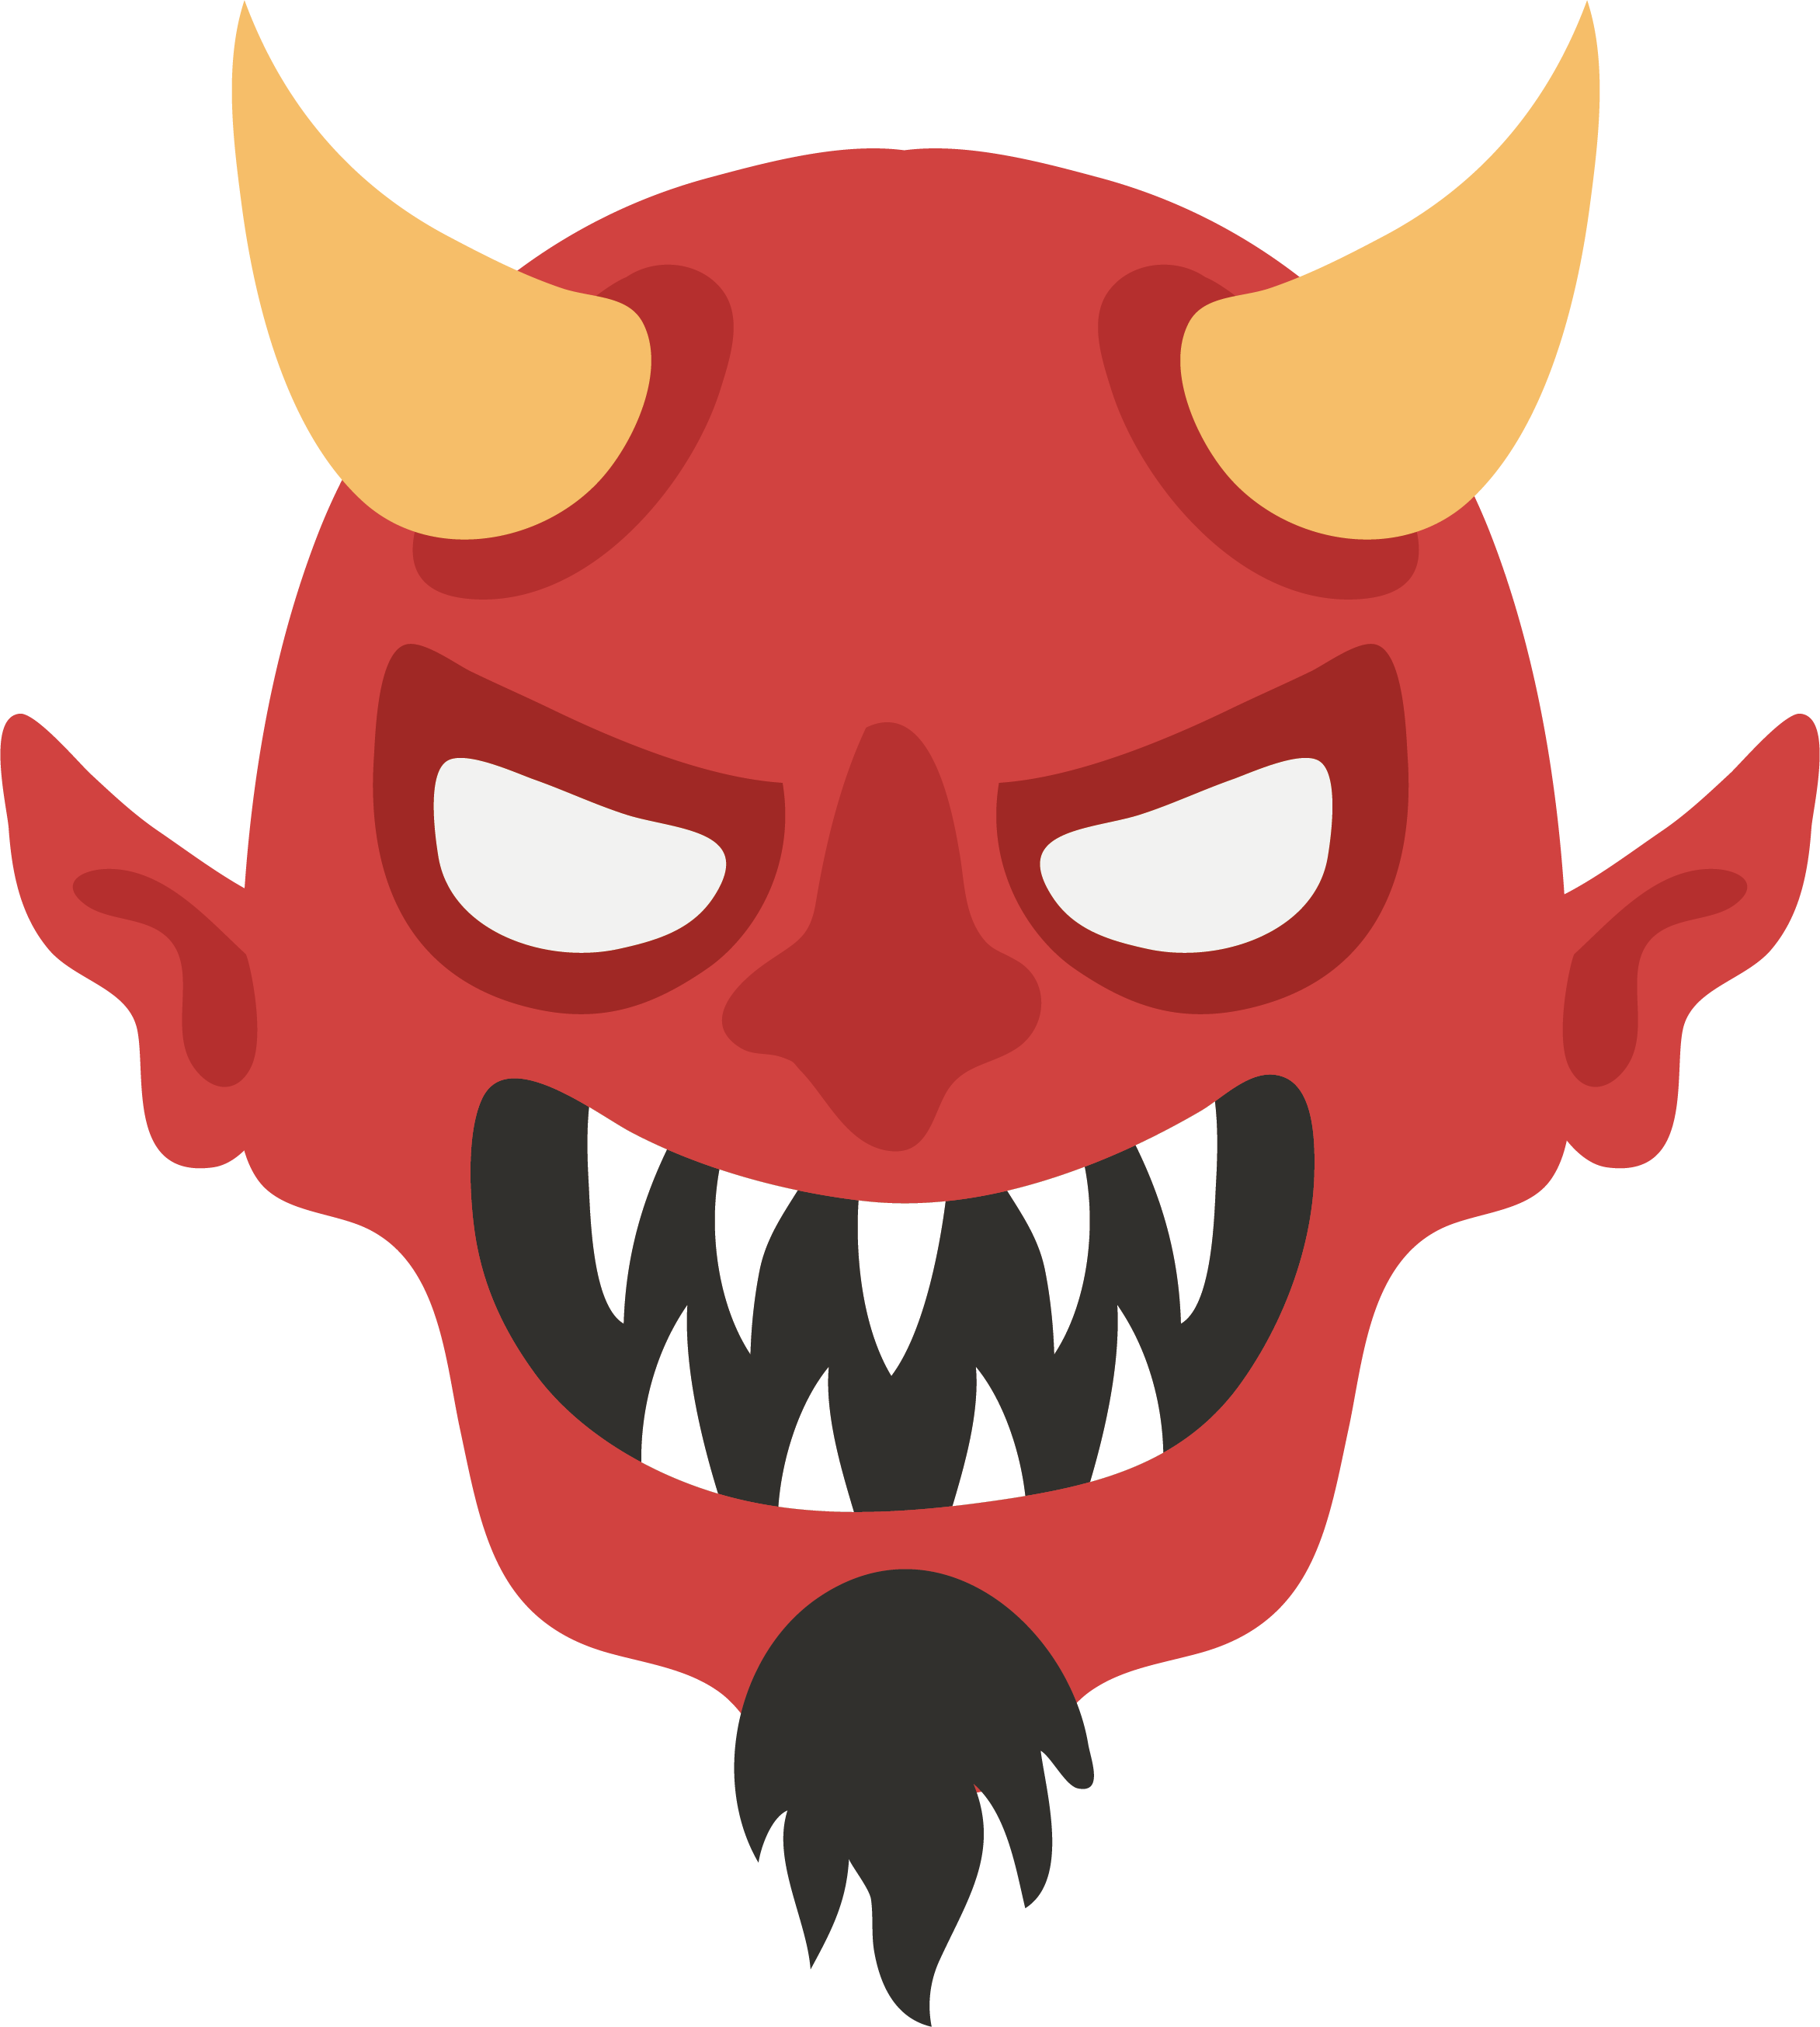 Дьявол PNG